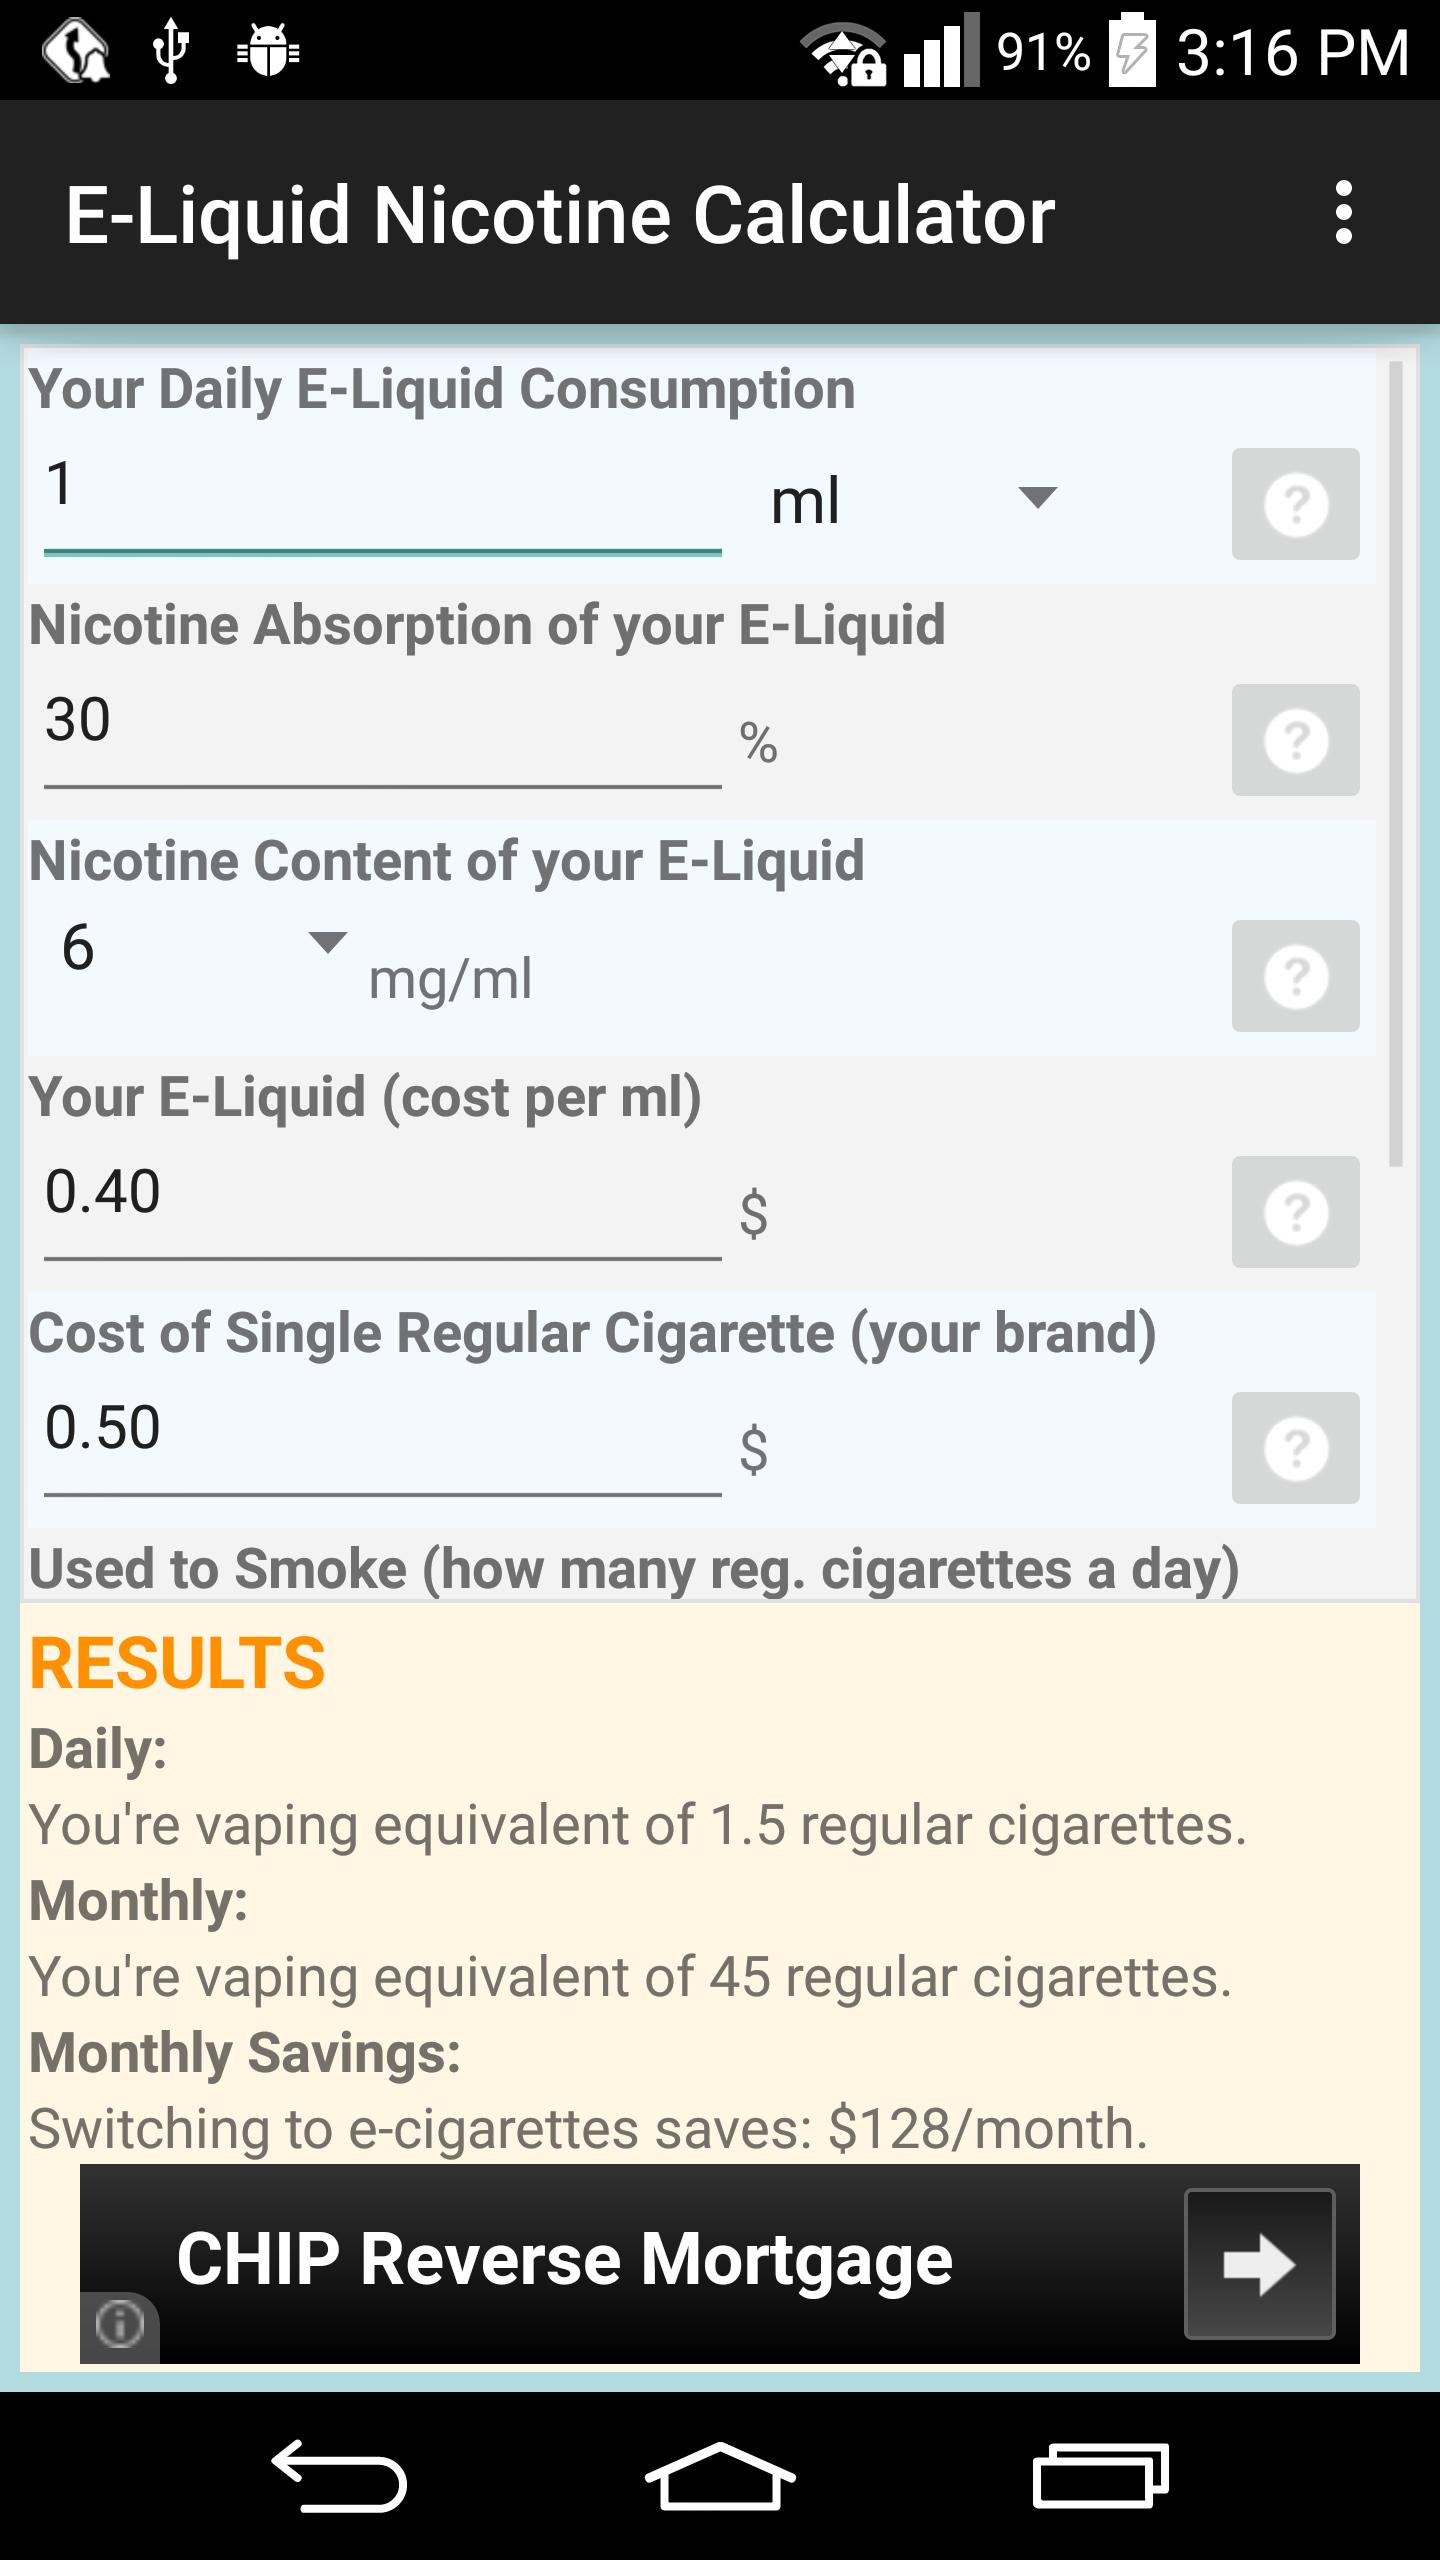 E-Liquid Nicotine Calculator APK for Android Download